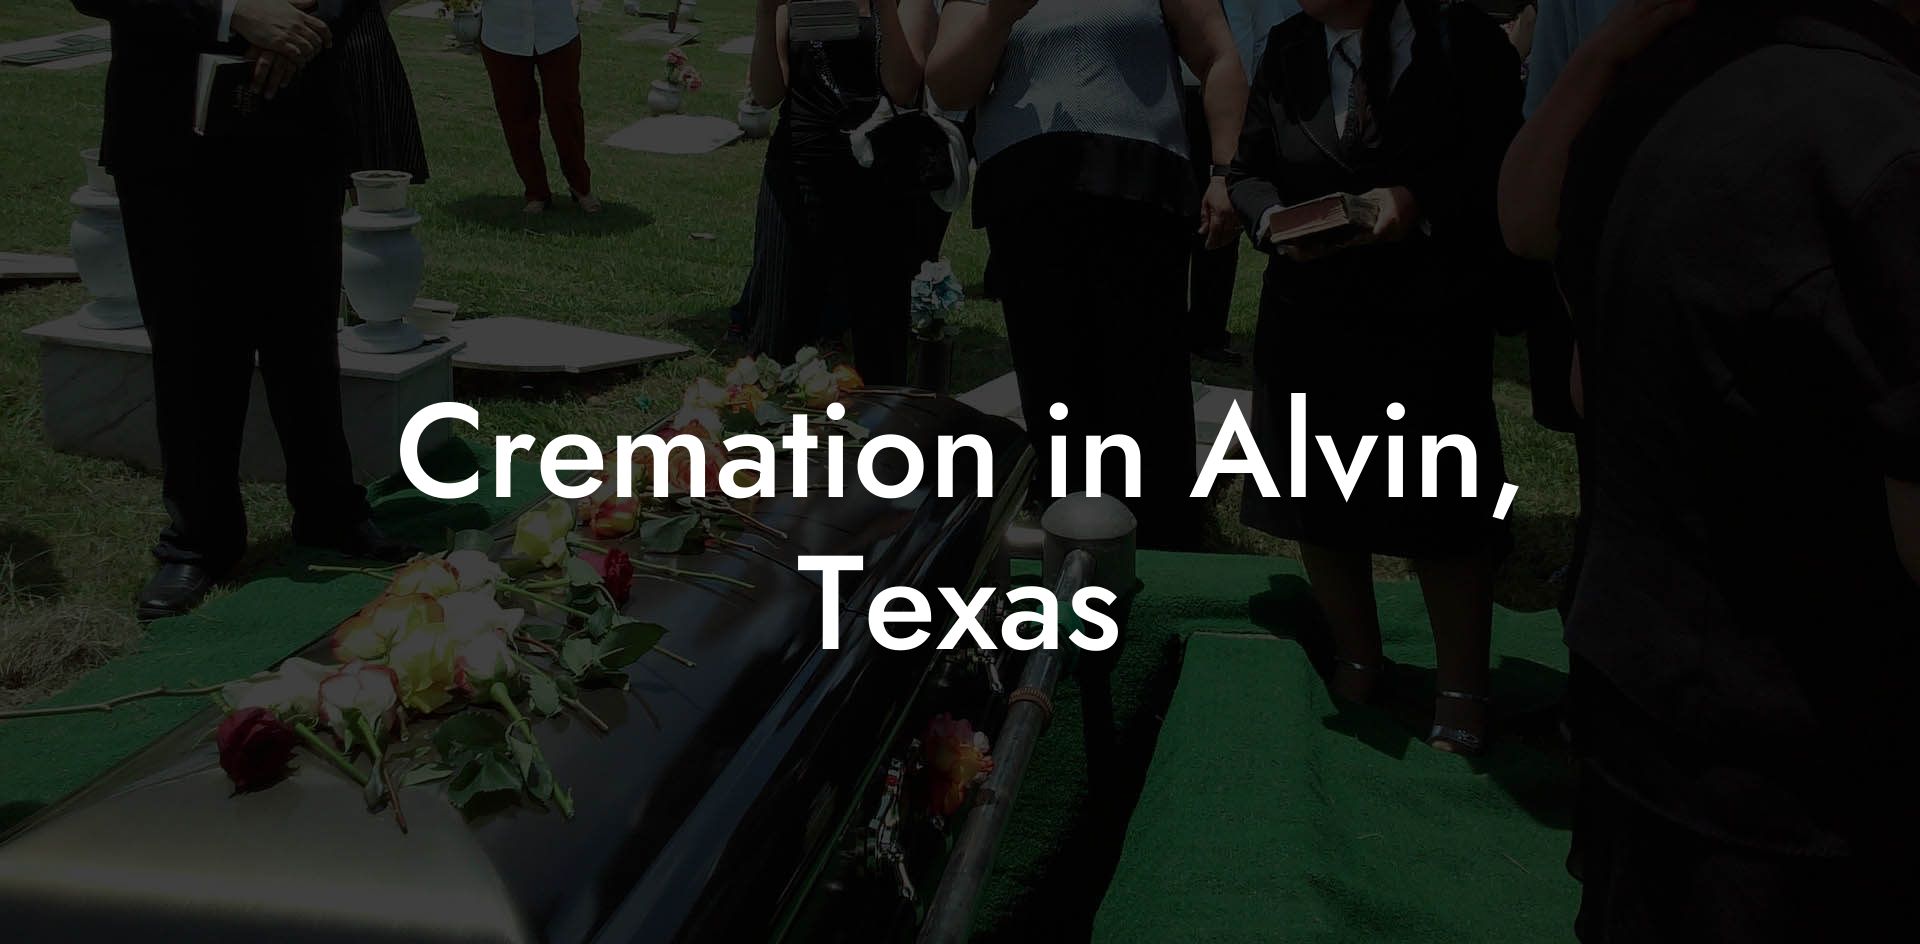 Cremation in Alvin, Texas